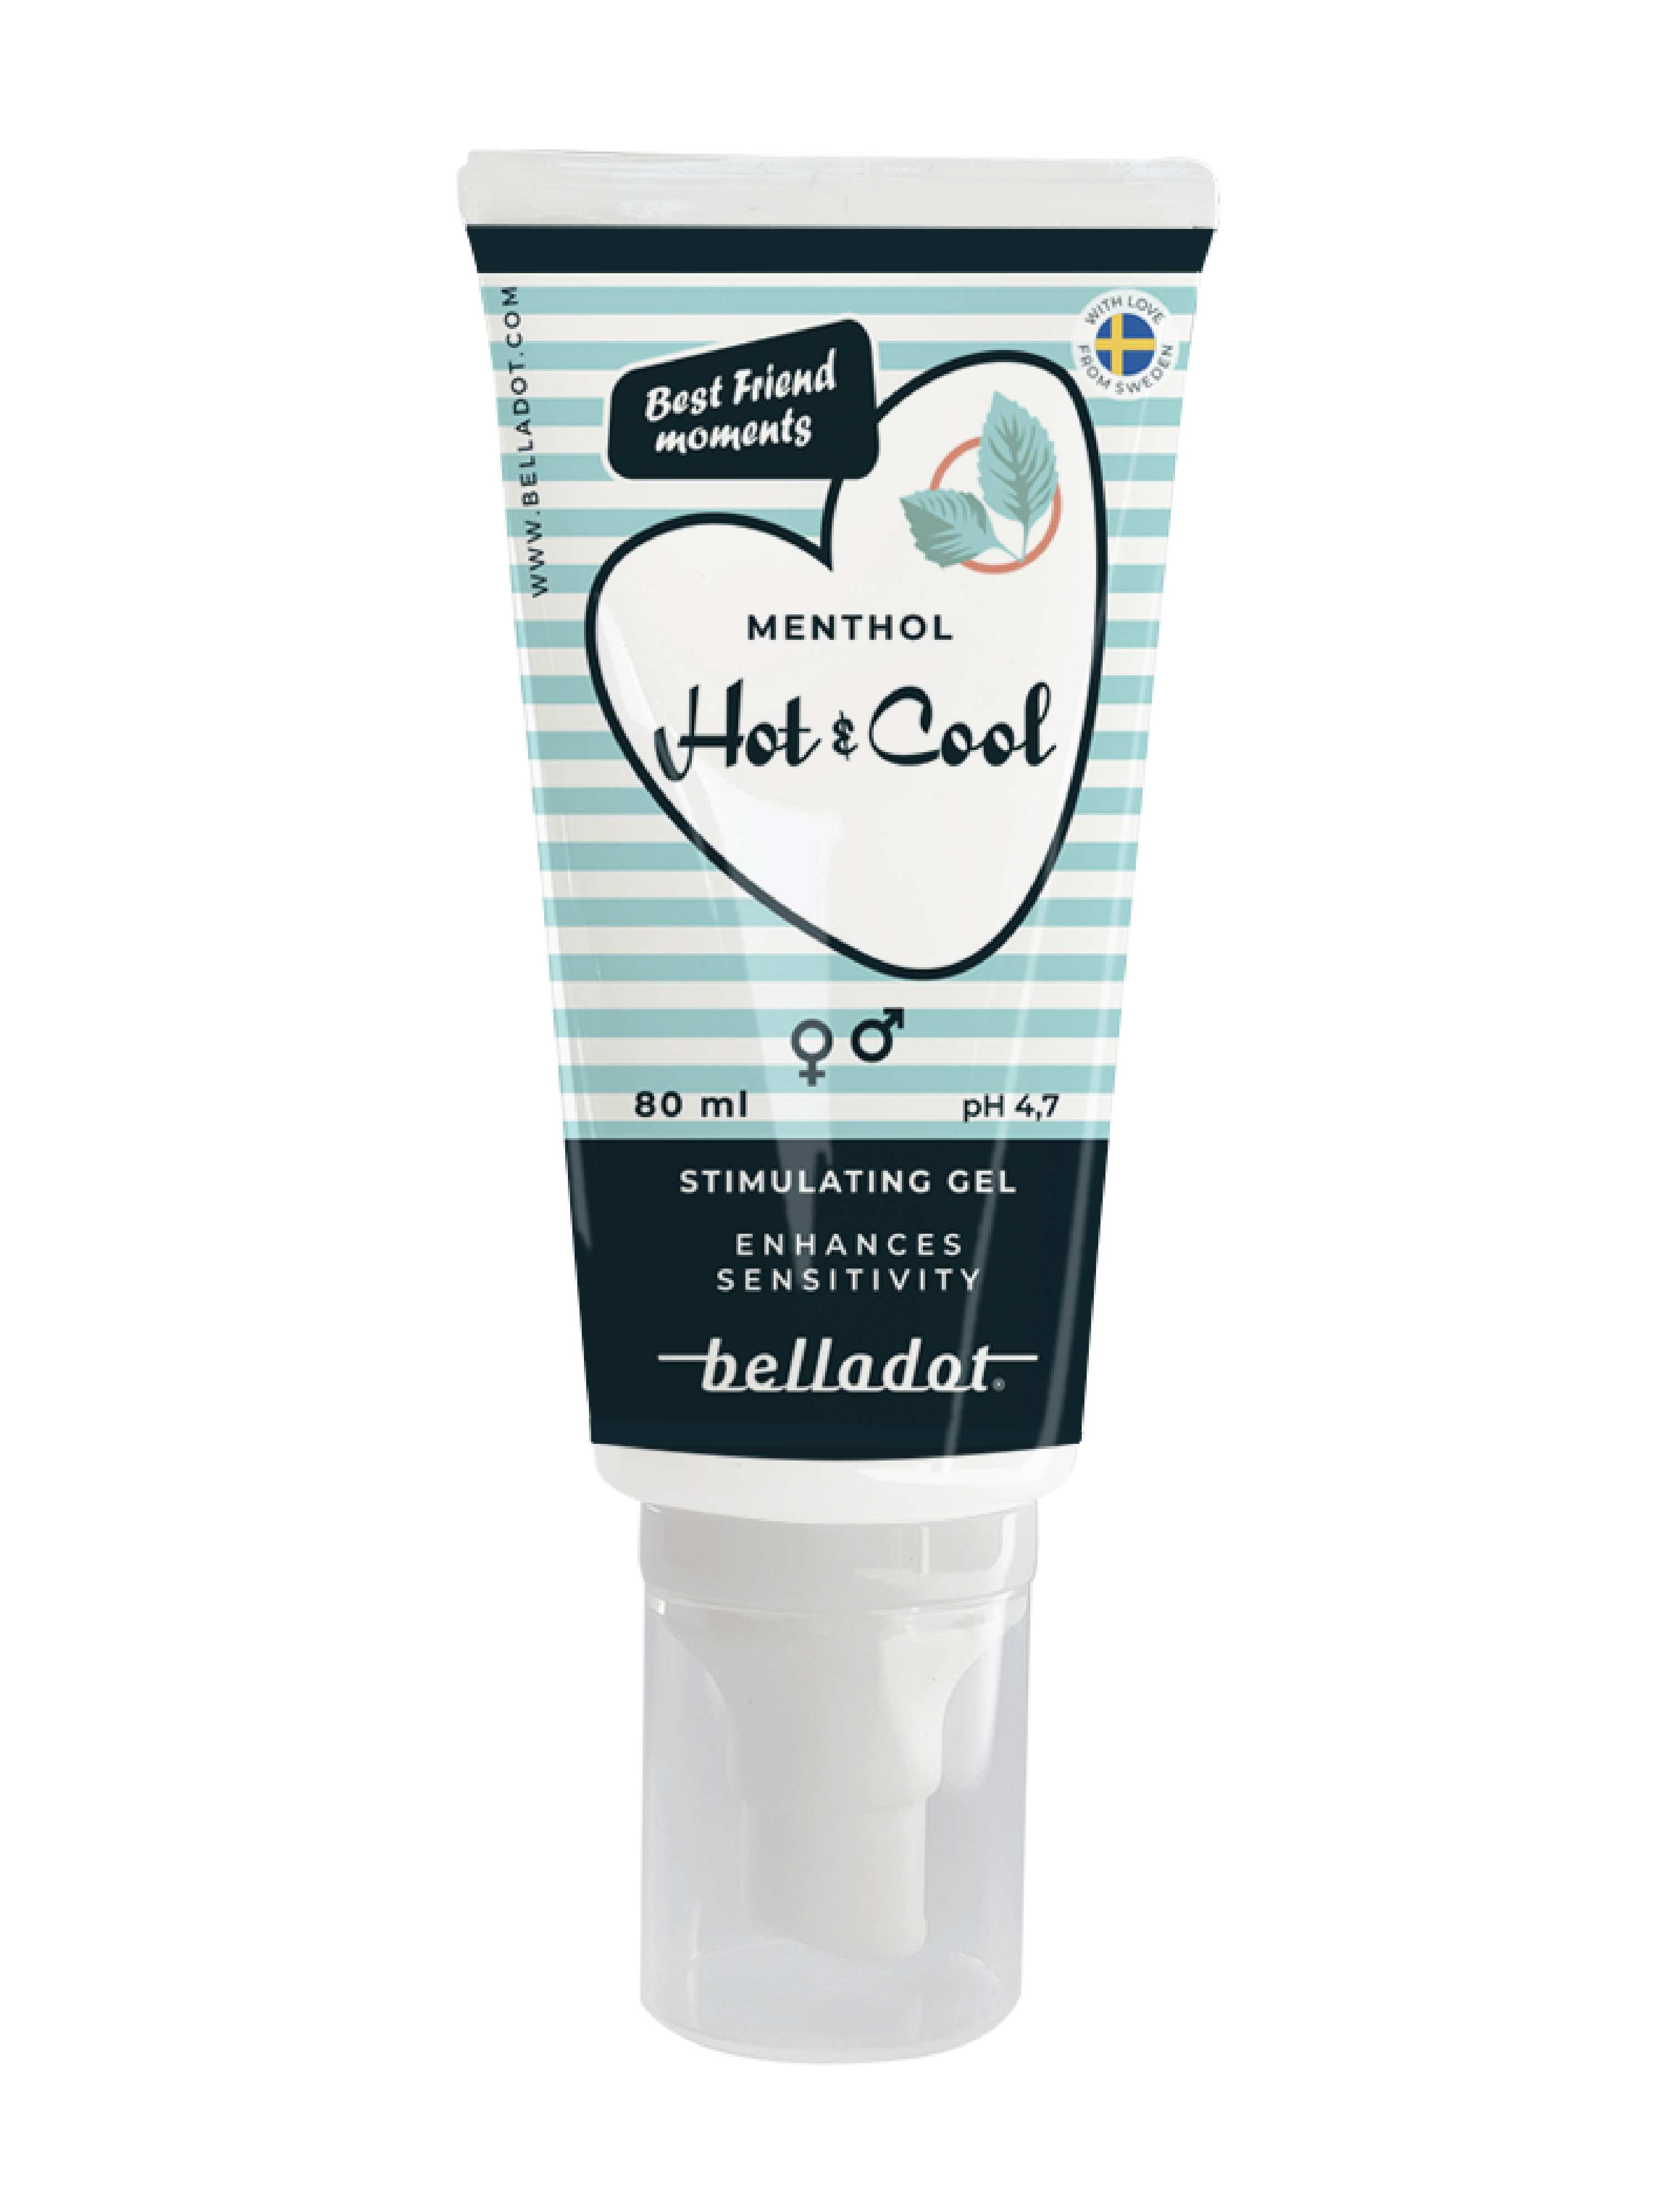 Belladot Hot & Cool stimulating menthol gel, 80 ml